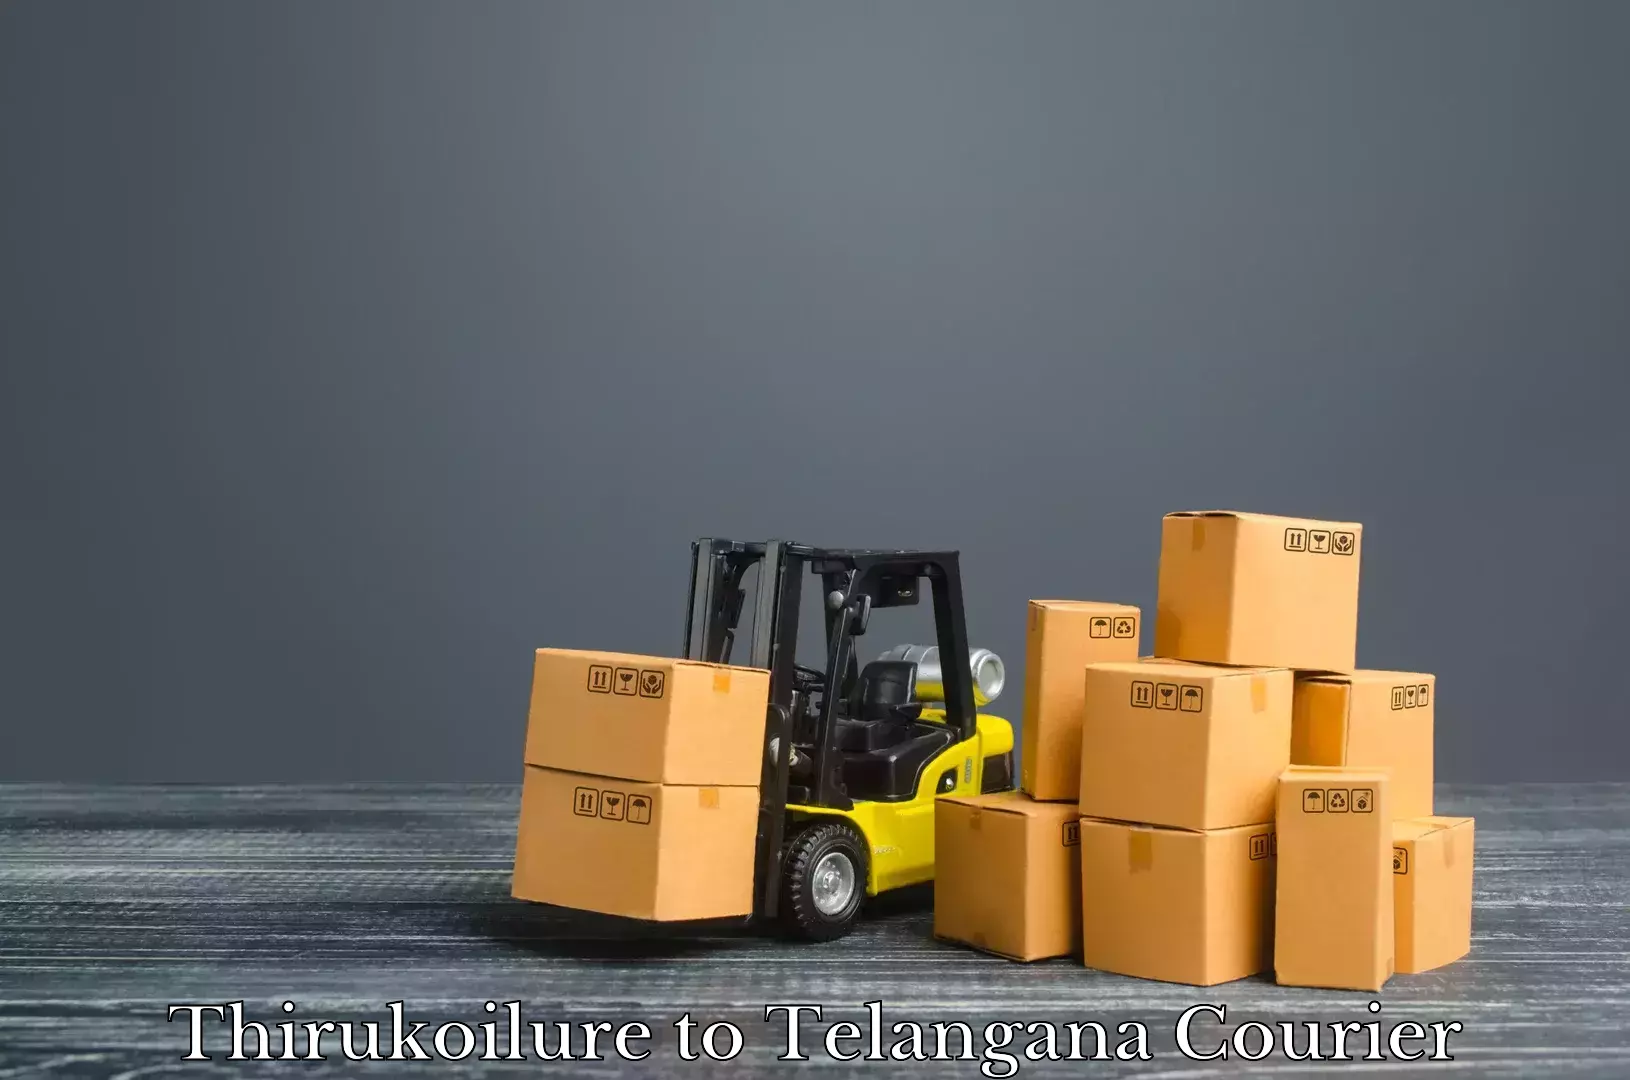 Baggage shipping optimization Thirukoilure to Manneguda